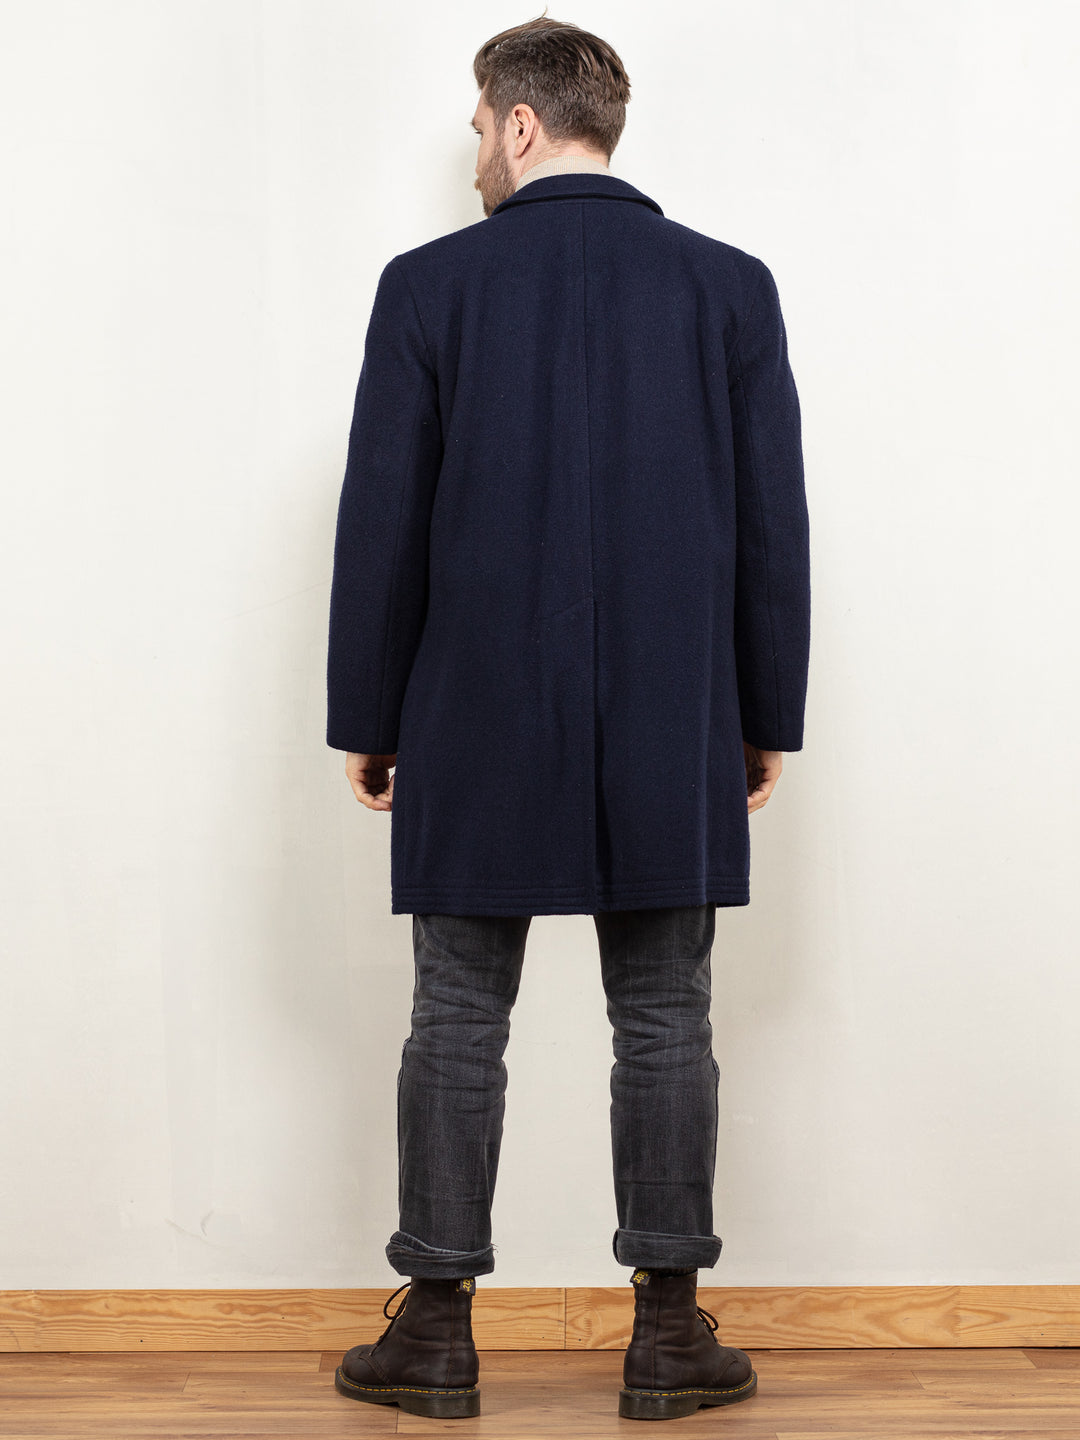 Men Wool Coat 90s navy wool blend midi long coat minimalist style preppy coat sleek mens sustainable vintage clothing size medium M